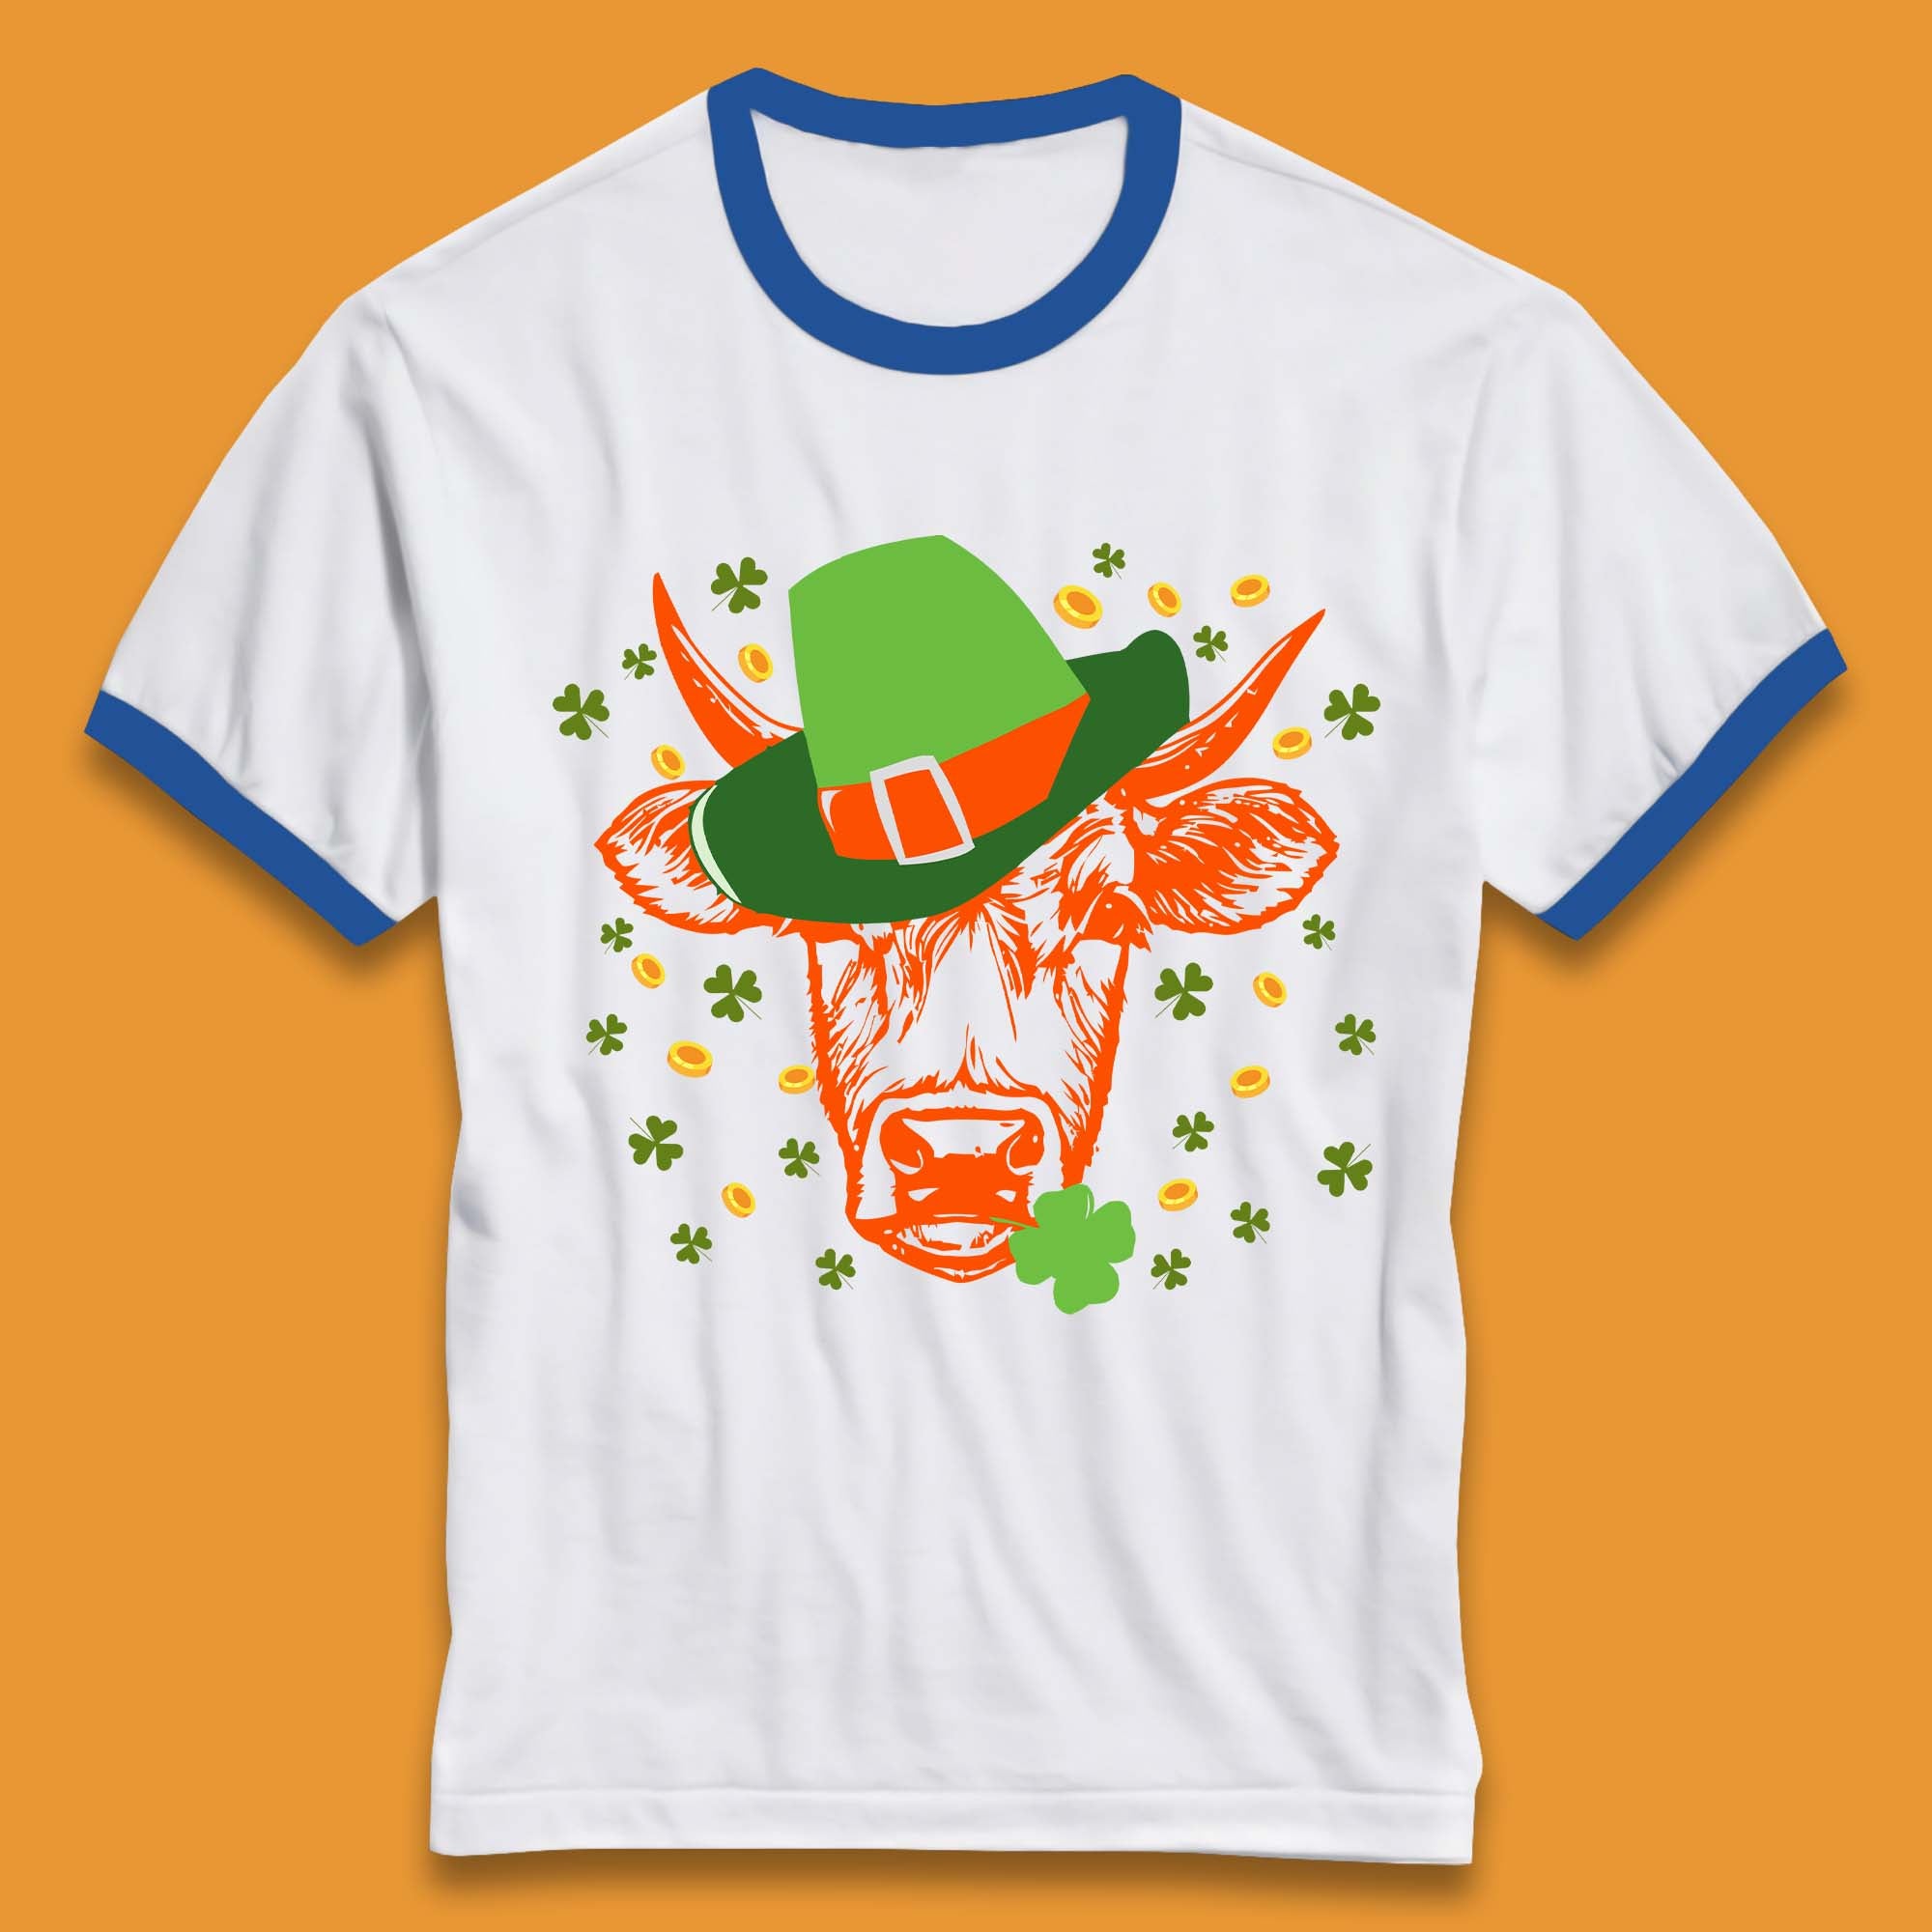 St Patrick's Cow Ringer T-Shirt